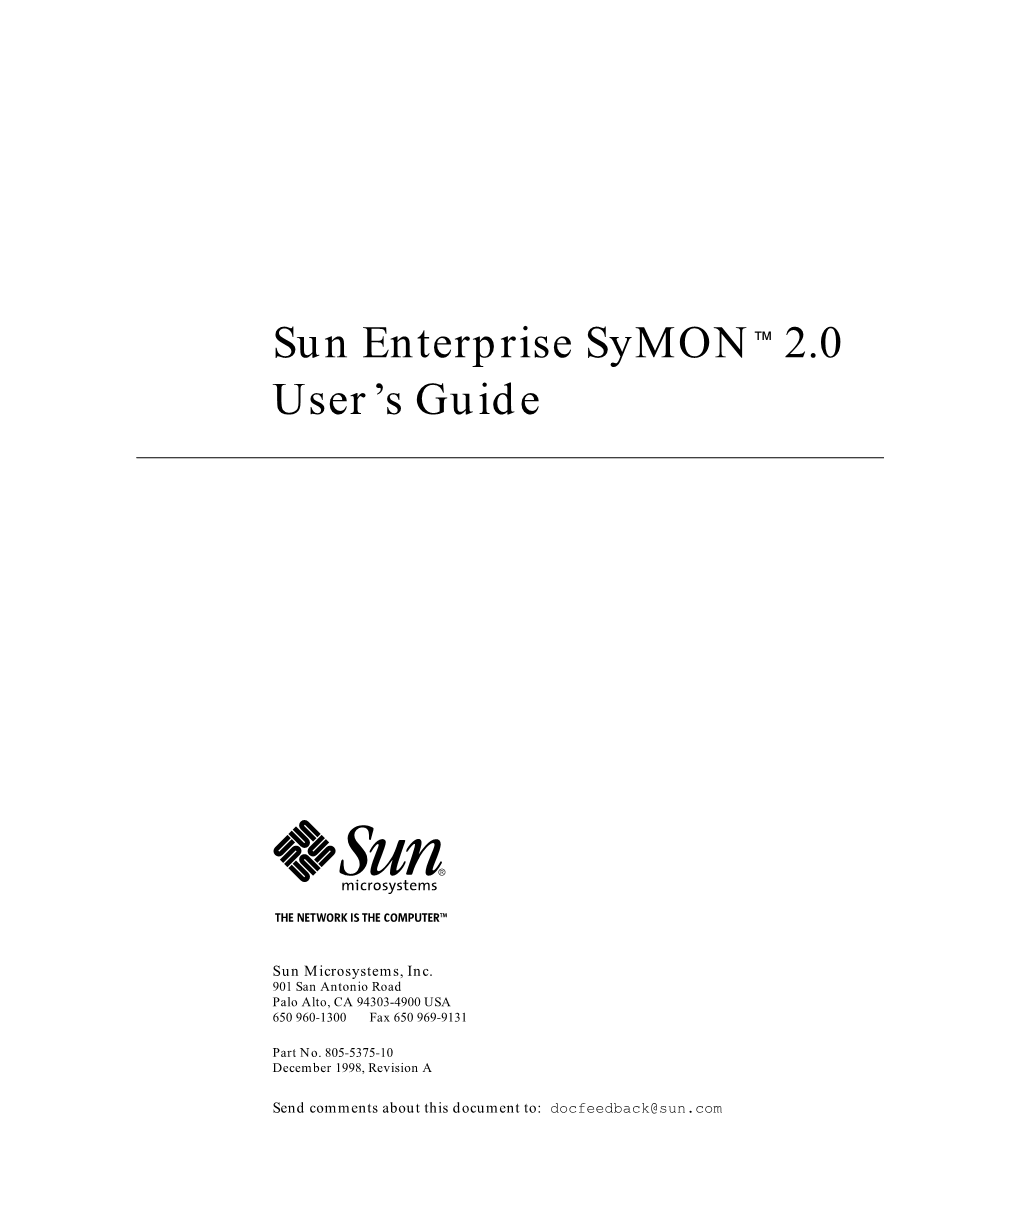 Sun Enterprise Symon 2.0 User's Guide